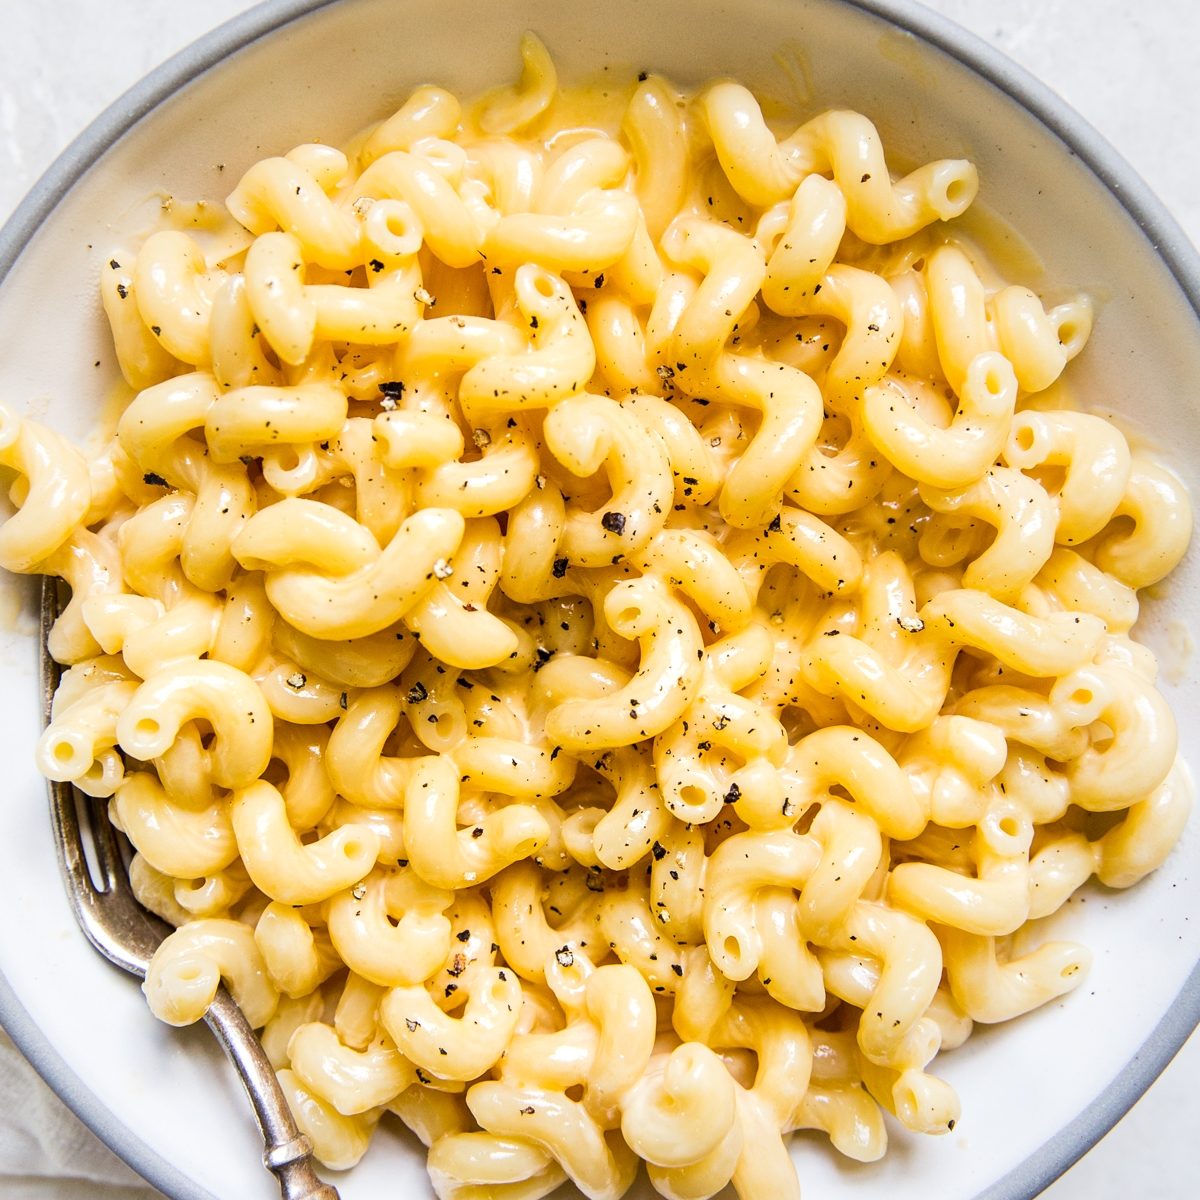 best macaroni and cheese